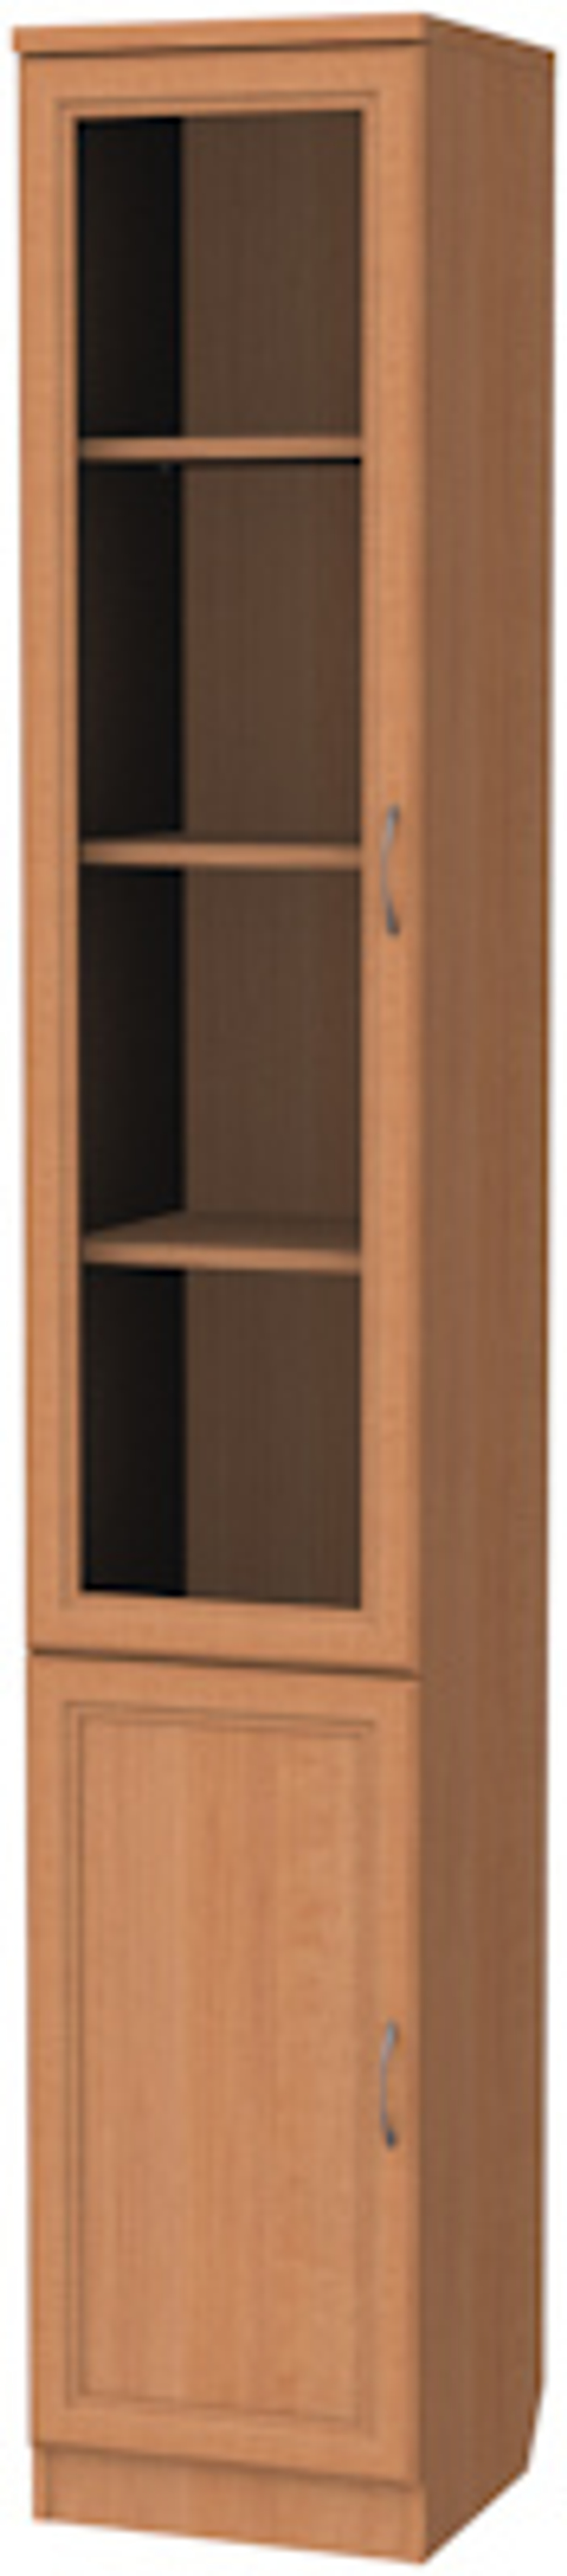 Шкаф для книг узкий АРТ203